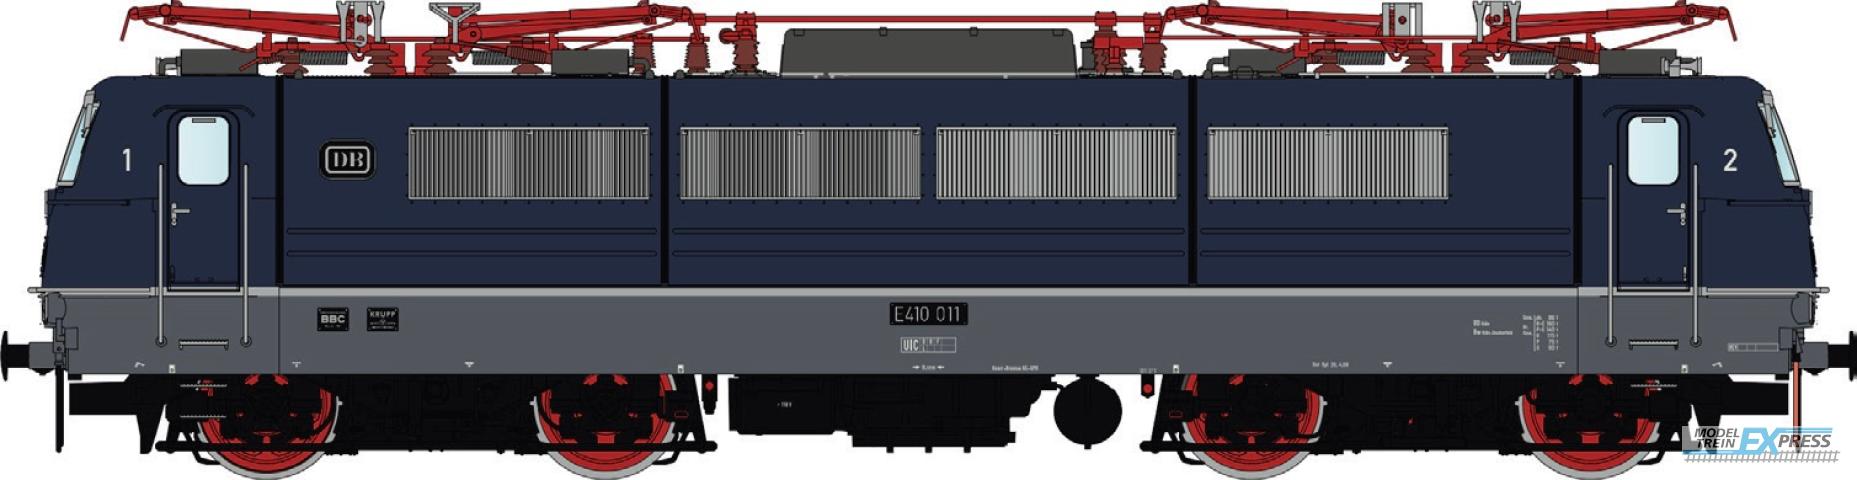 LS Models 16022 DB E 410 011 (BBC) viersysteem-eloc Ep. IIIc (1967), staalblauw/leisteengrijs, 4 stroomafnemers, depot Köln-Deutzerfeld / Ep. IIIc / DB / HO / DC / 1 P.